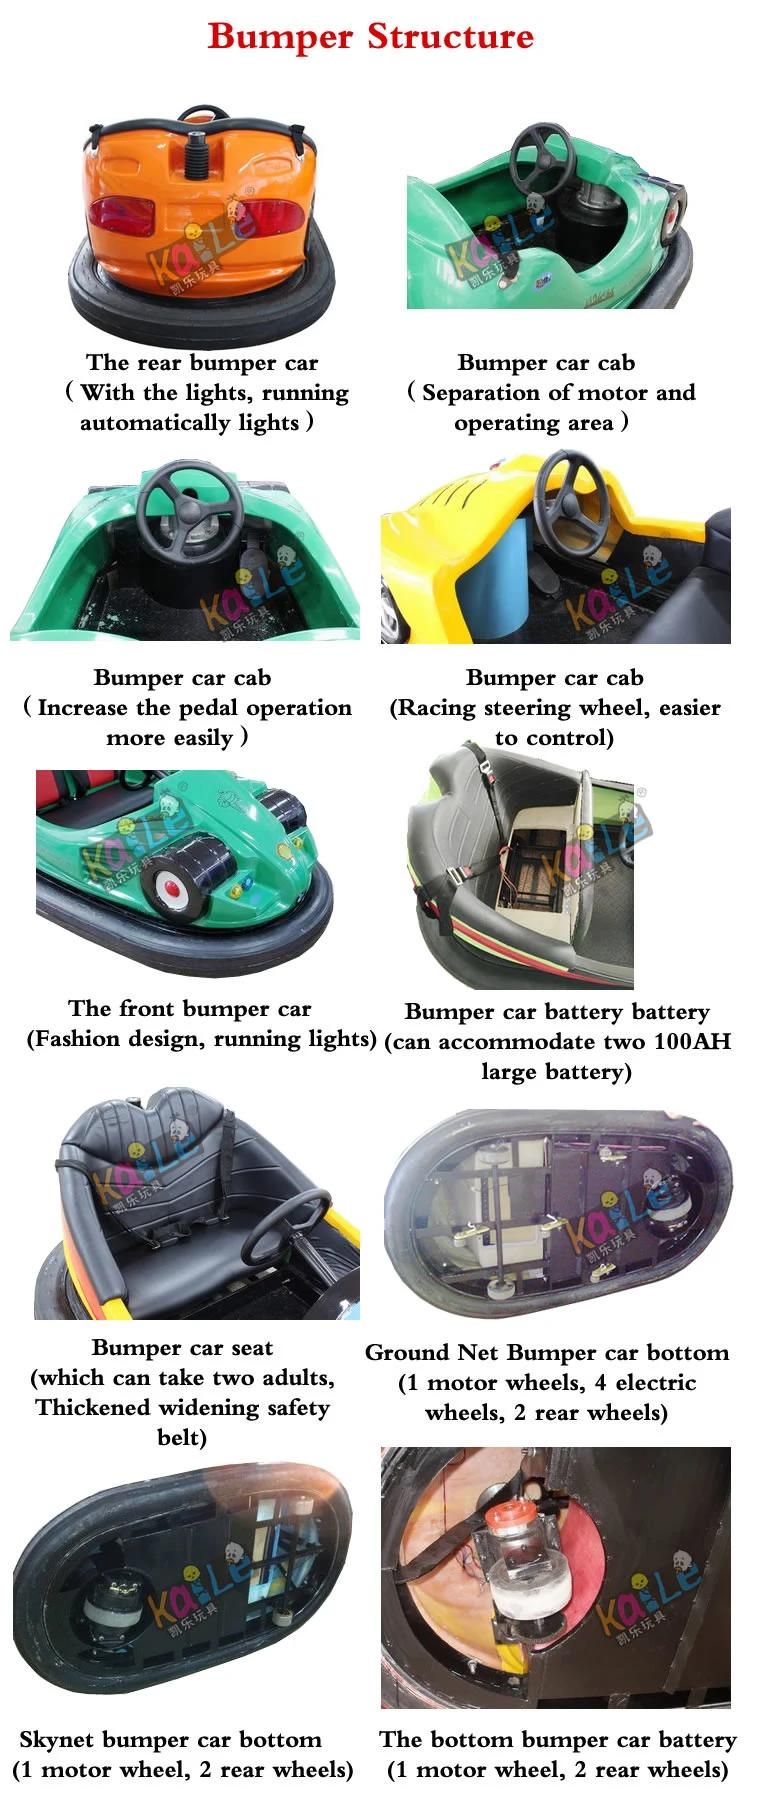 New 380V Input Ground-Grid Bumper Cars Kids Amusement Park Equipment Electric Ground Net Dodgem Car (PPC-104D)